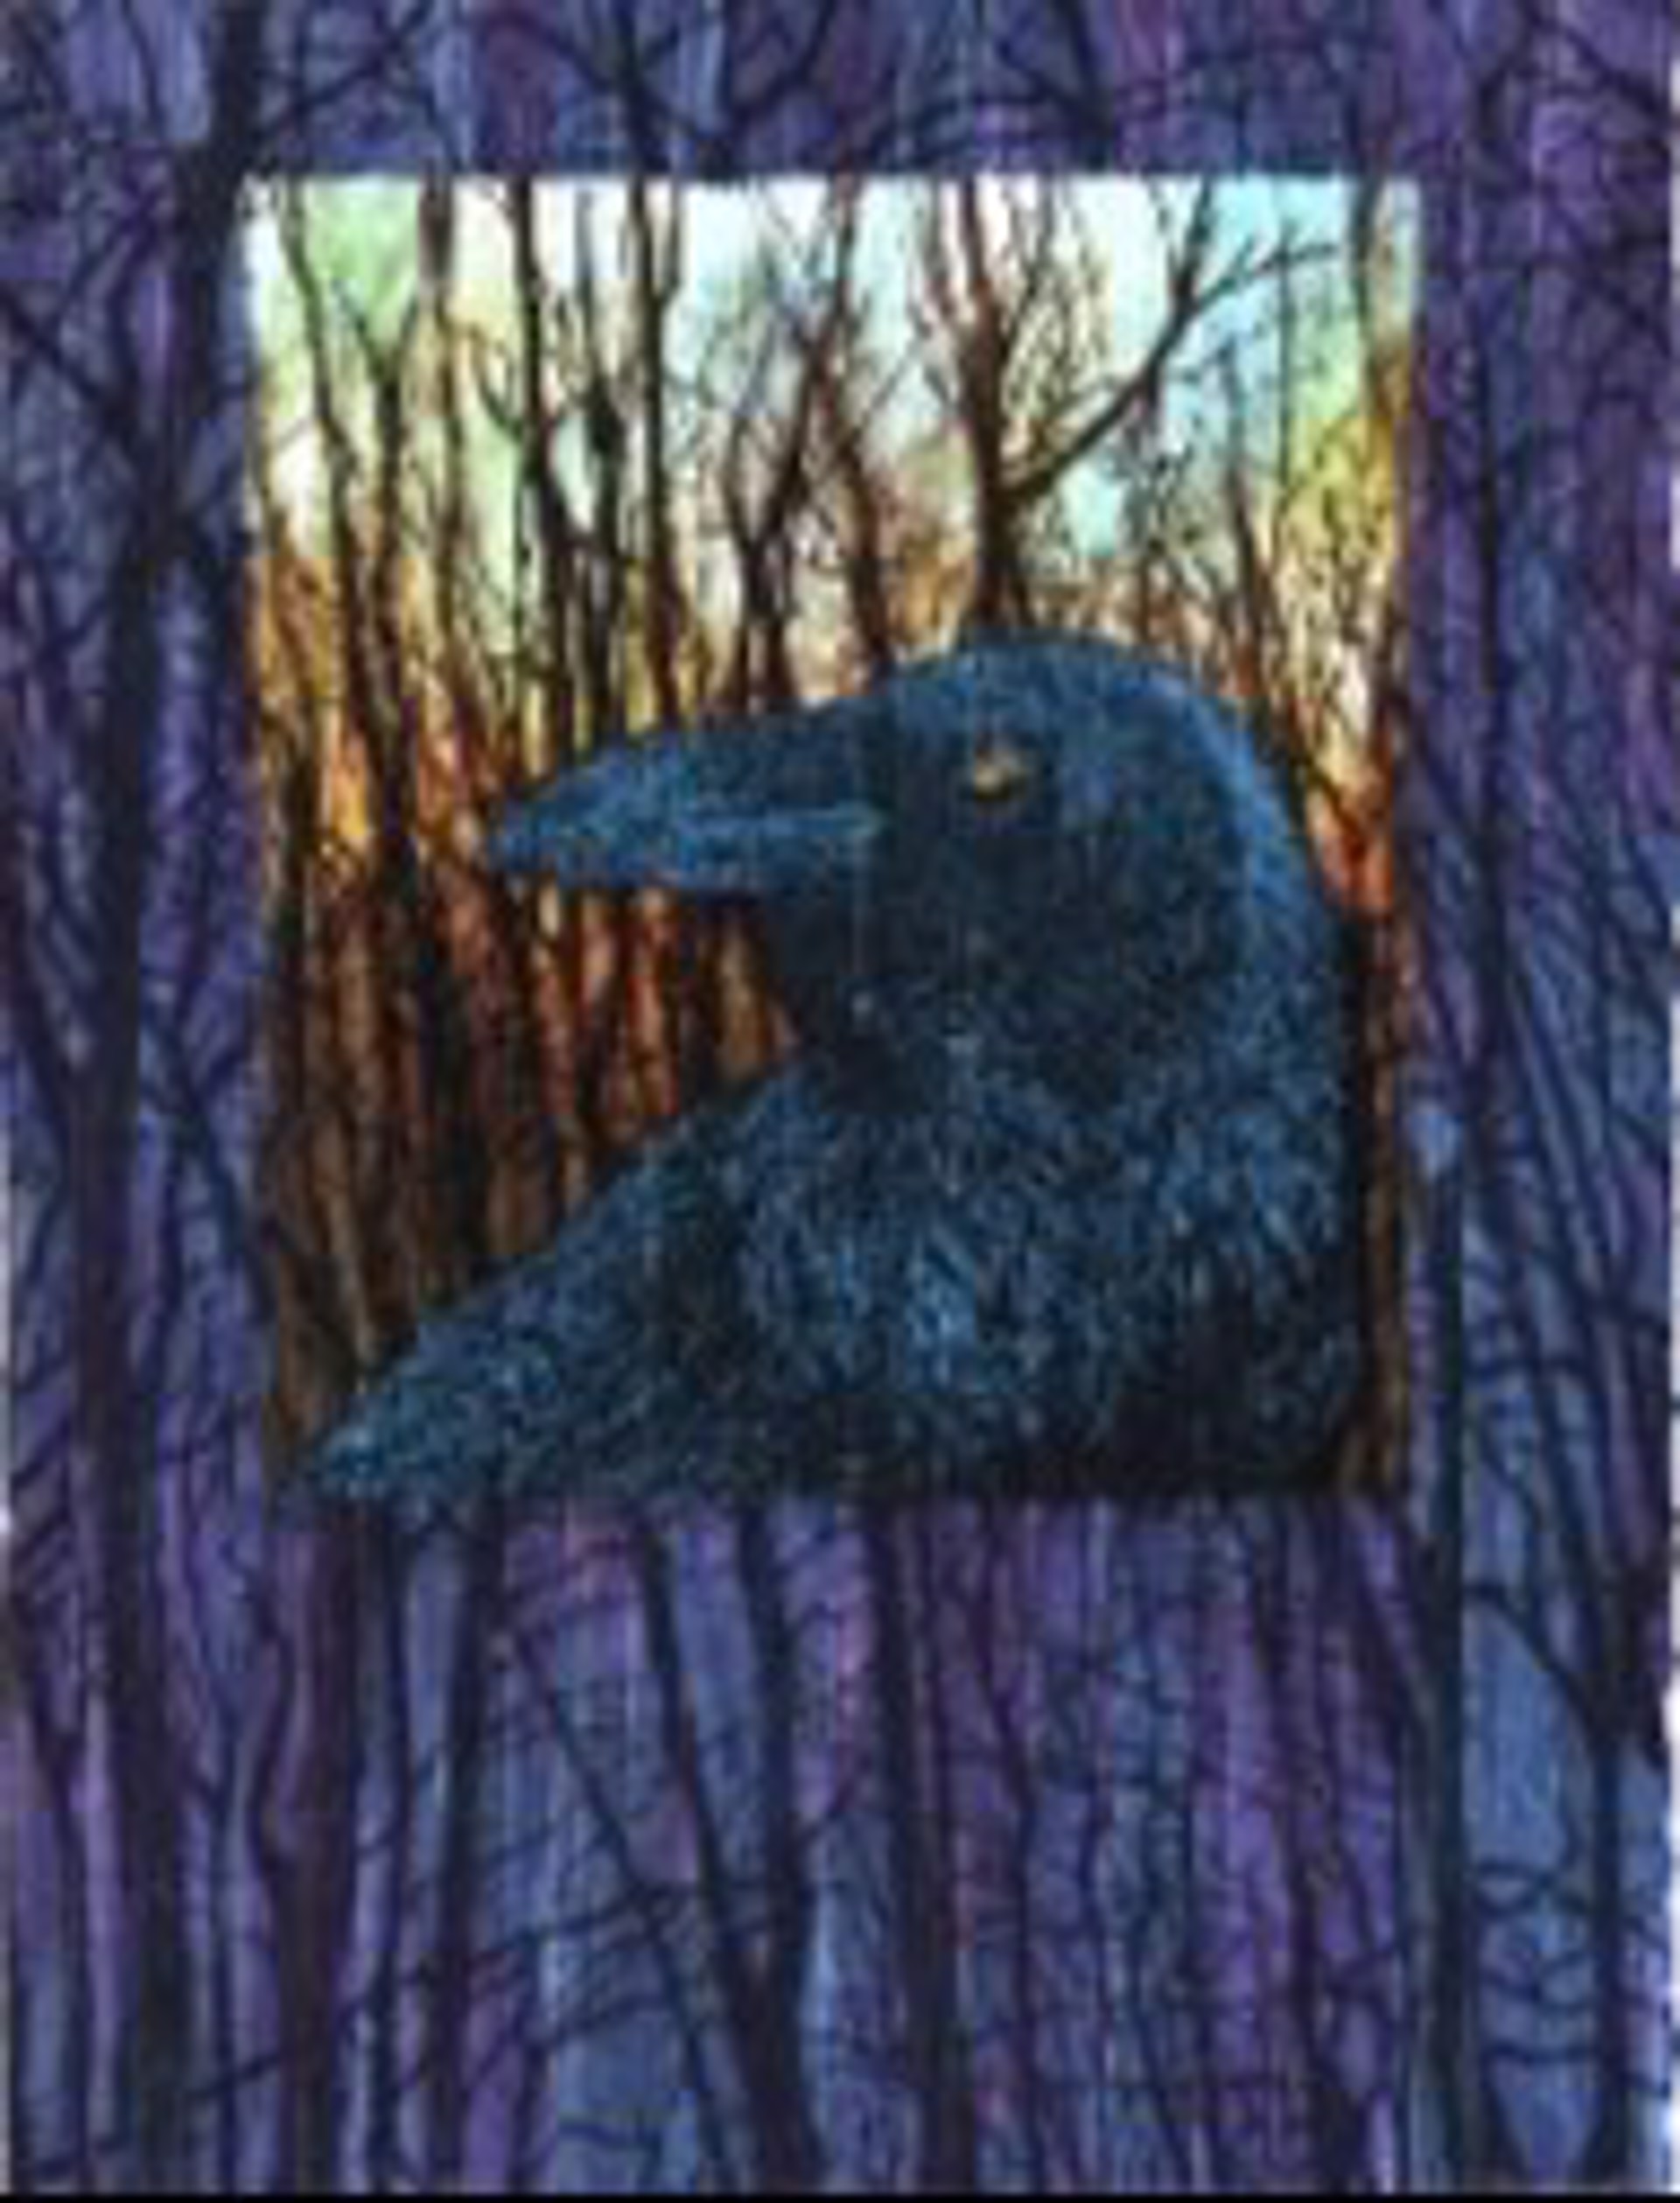 Raven by Linda Rzoska